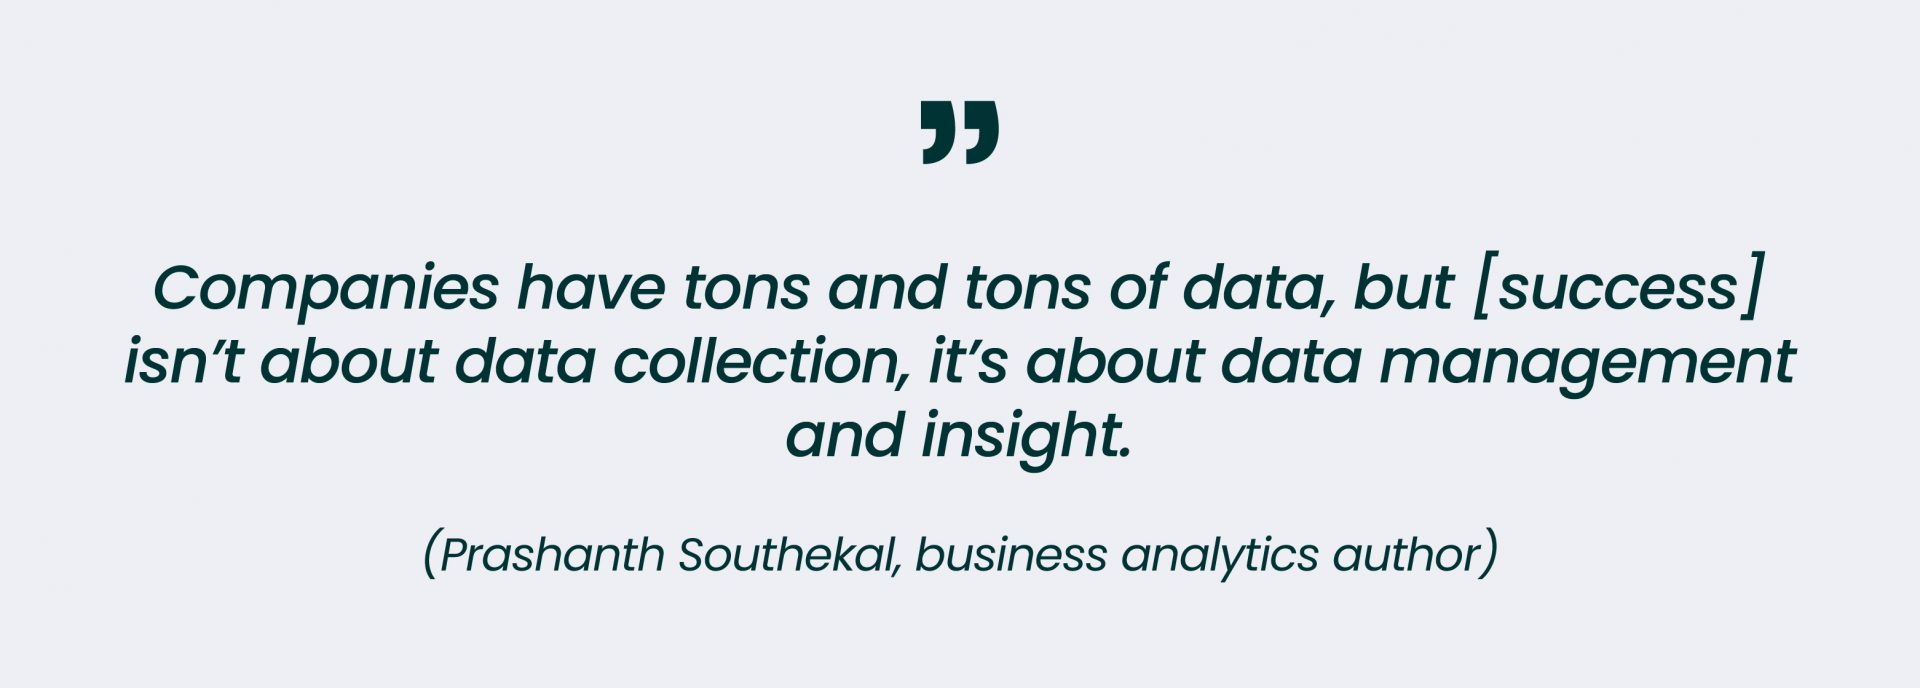 Data Management Insights